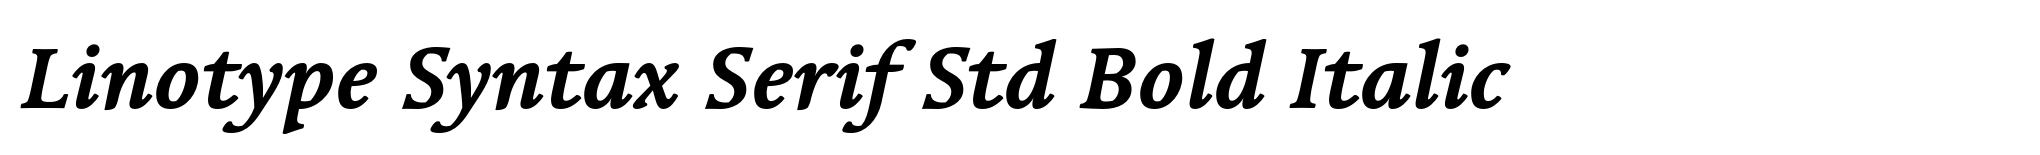 Linotype Syntax Serif Std Bold Italic image